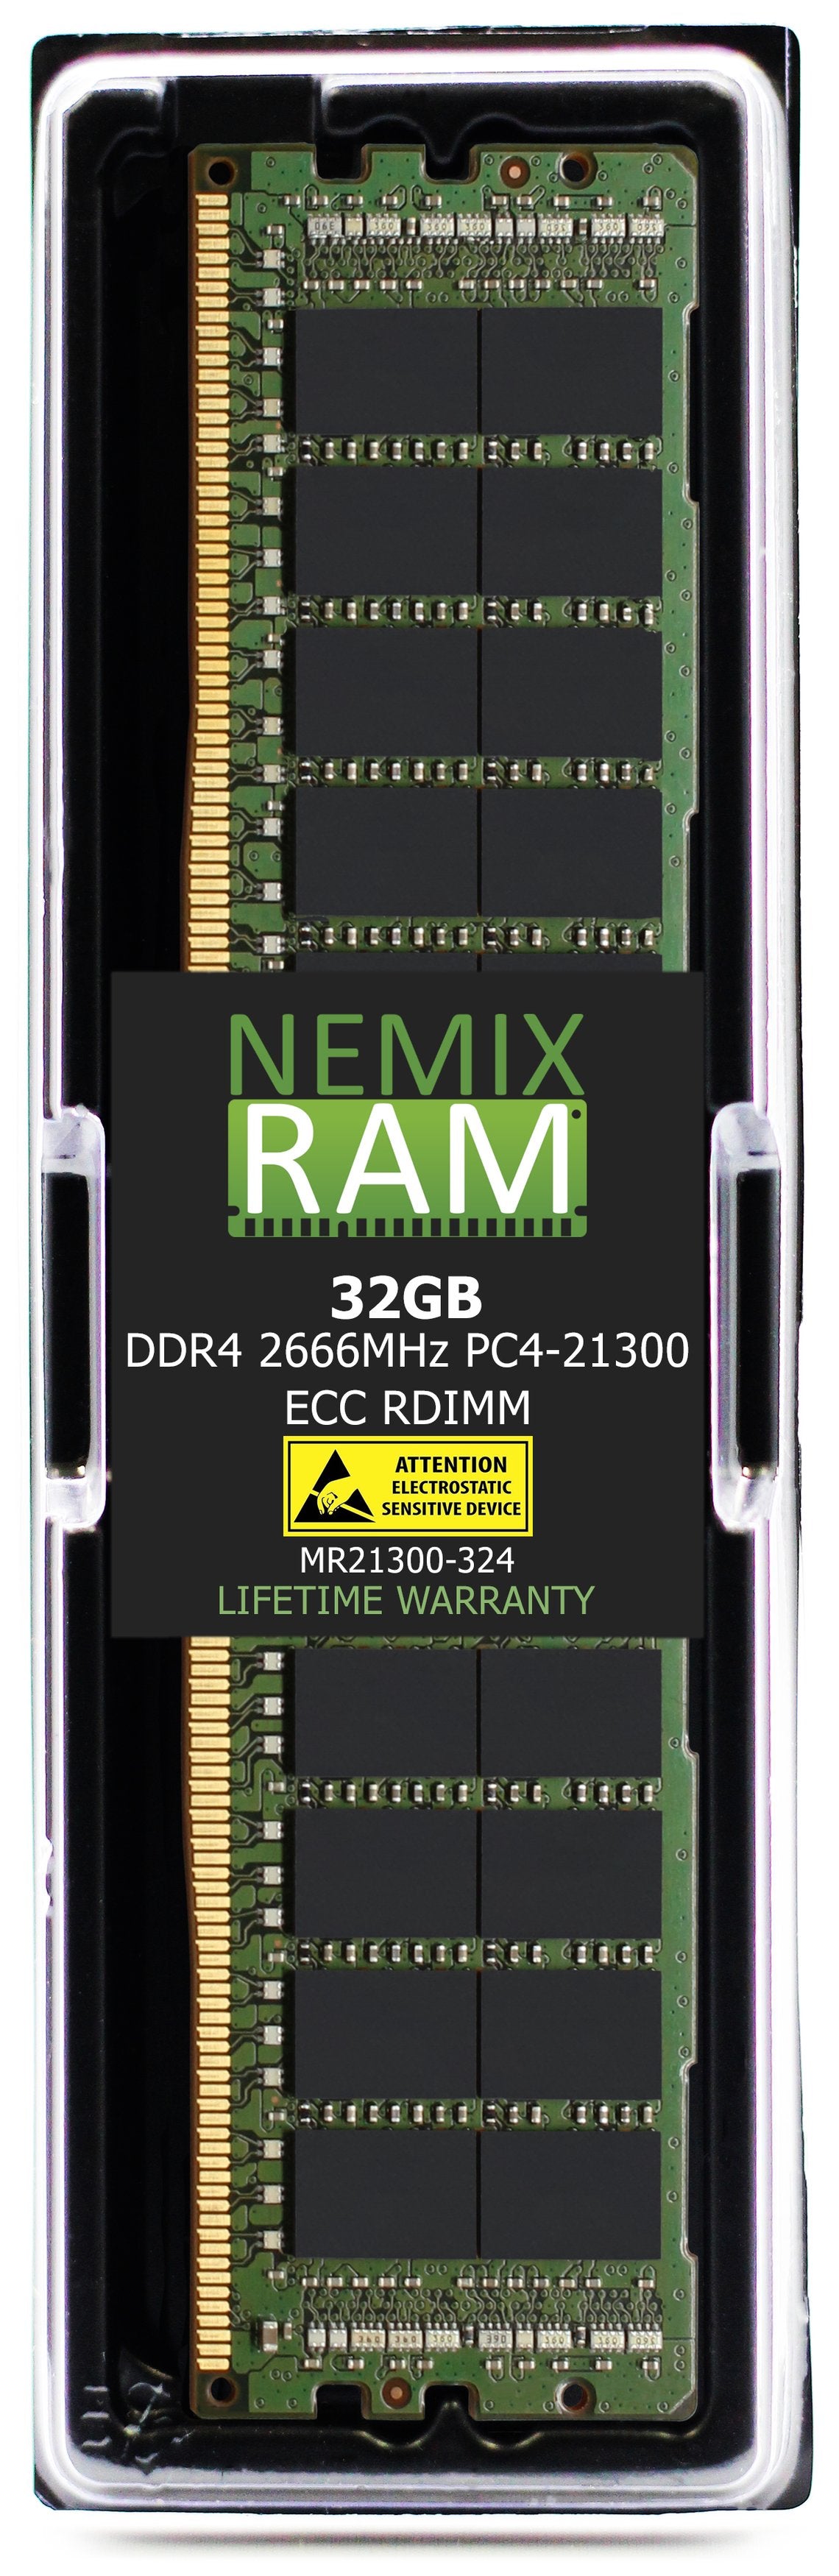 NEC Express5800 R120h Memory Module N8102-711 32GB DDR4 2666MHZ PC4-21300 RDIMM